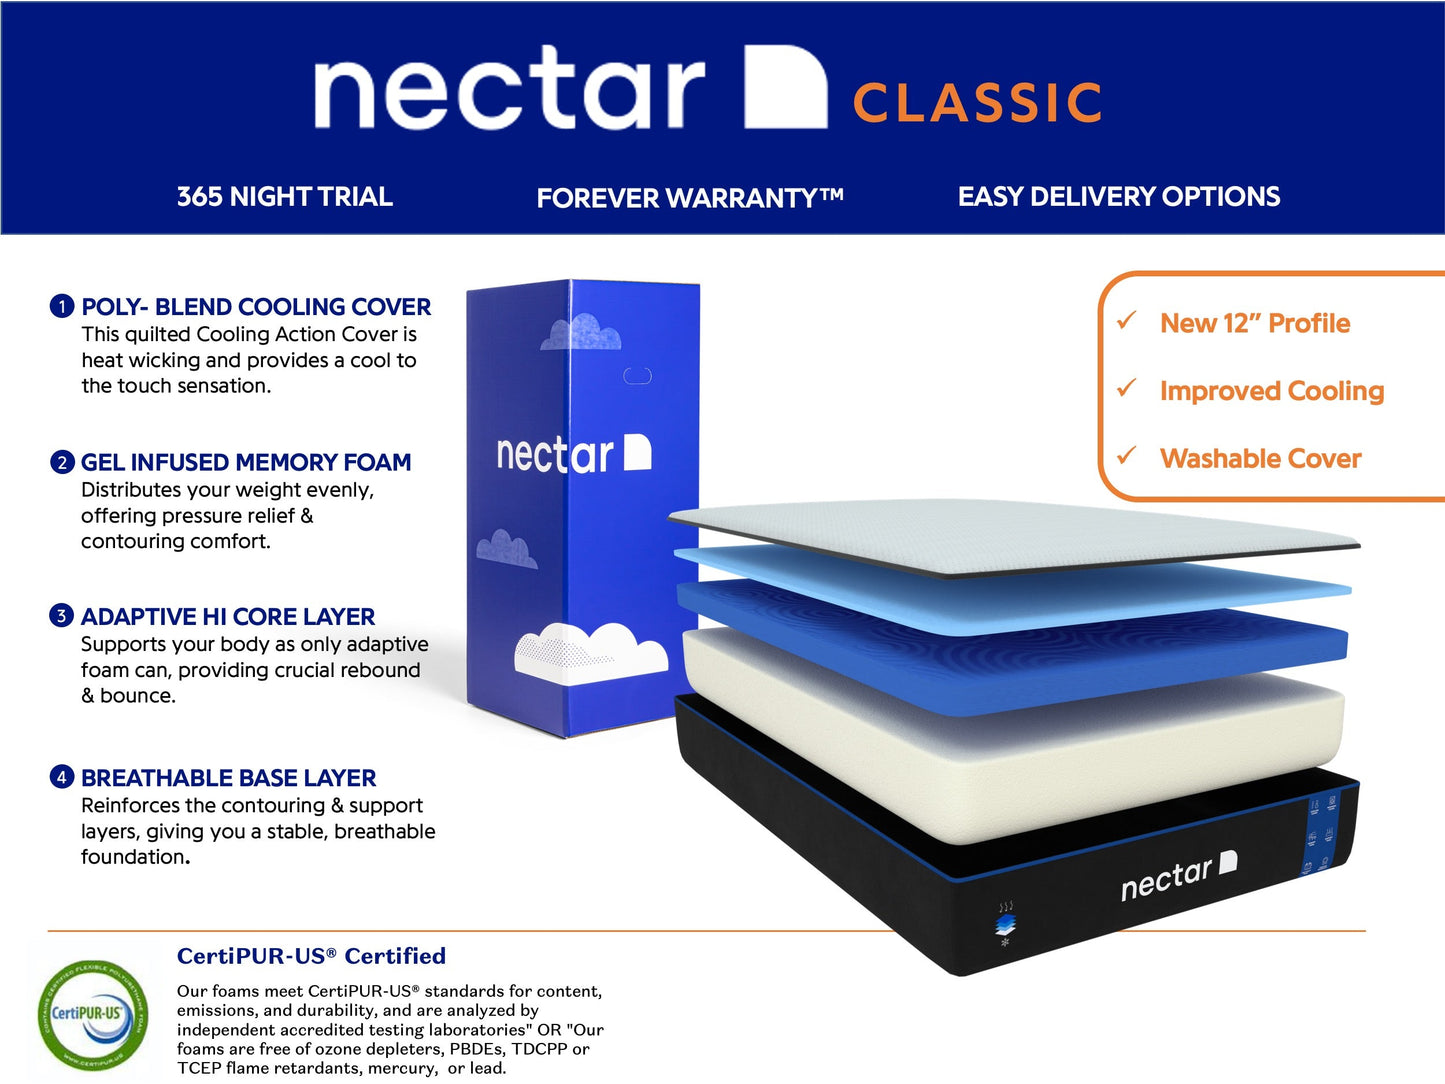 Nectar Classic 12" Memory Foam Mattress